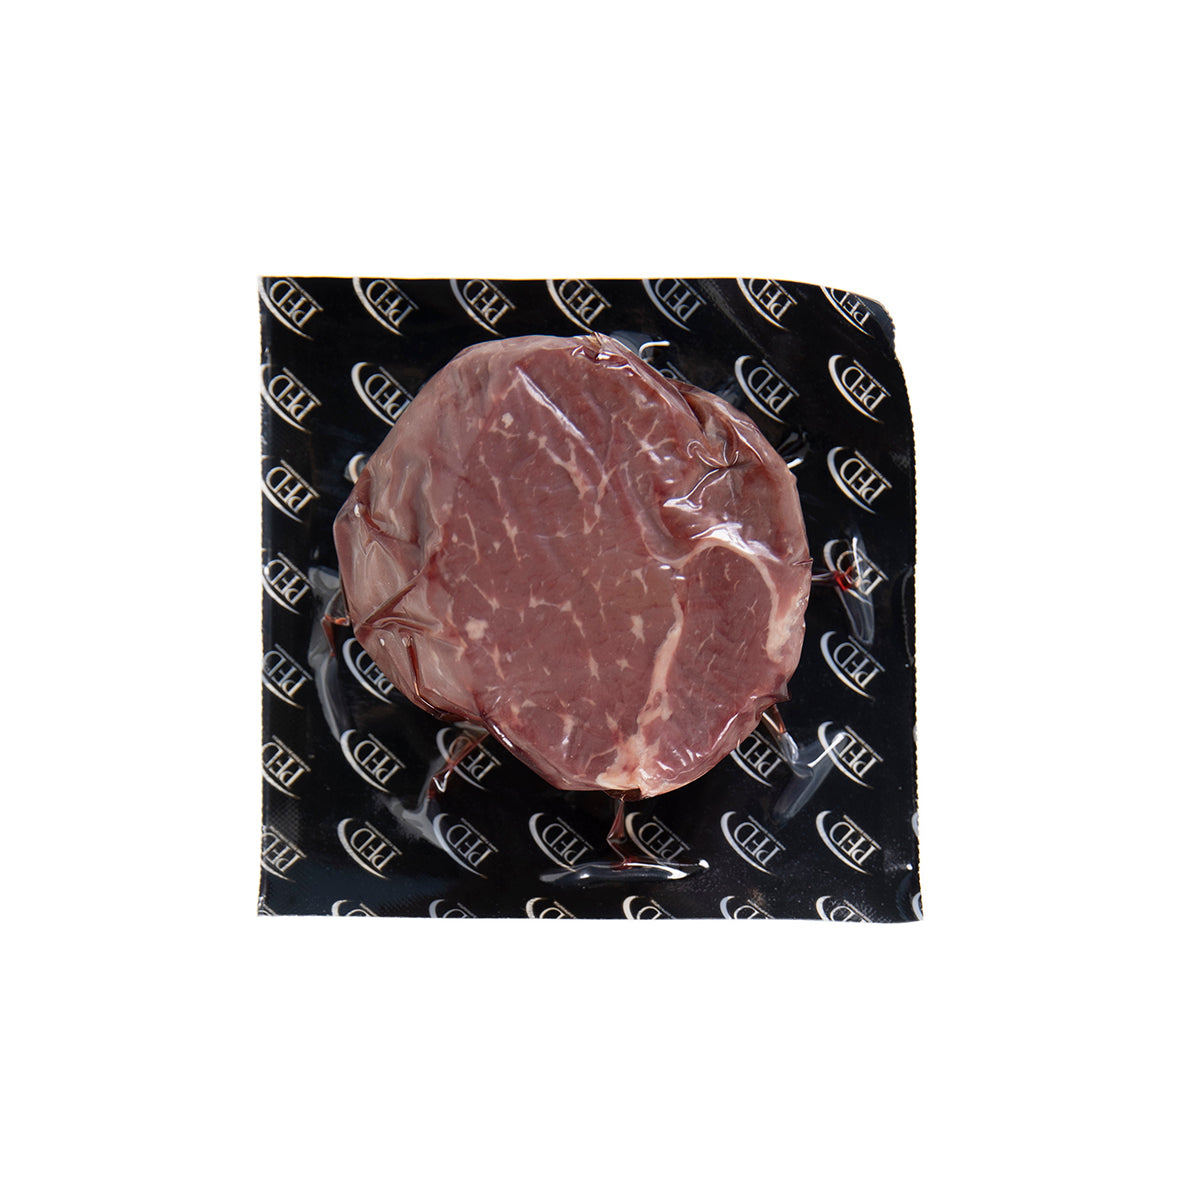 Prime Food Distributor (Pfd) Signature Beef Top Sirloin Butt Steaks 8 OZ